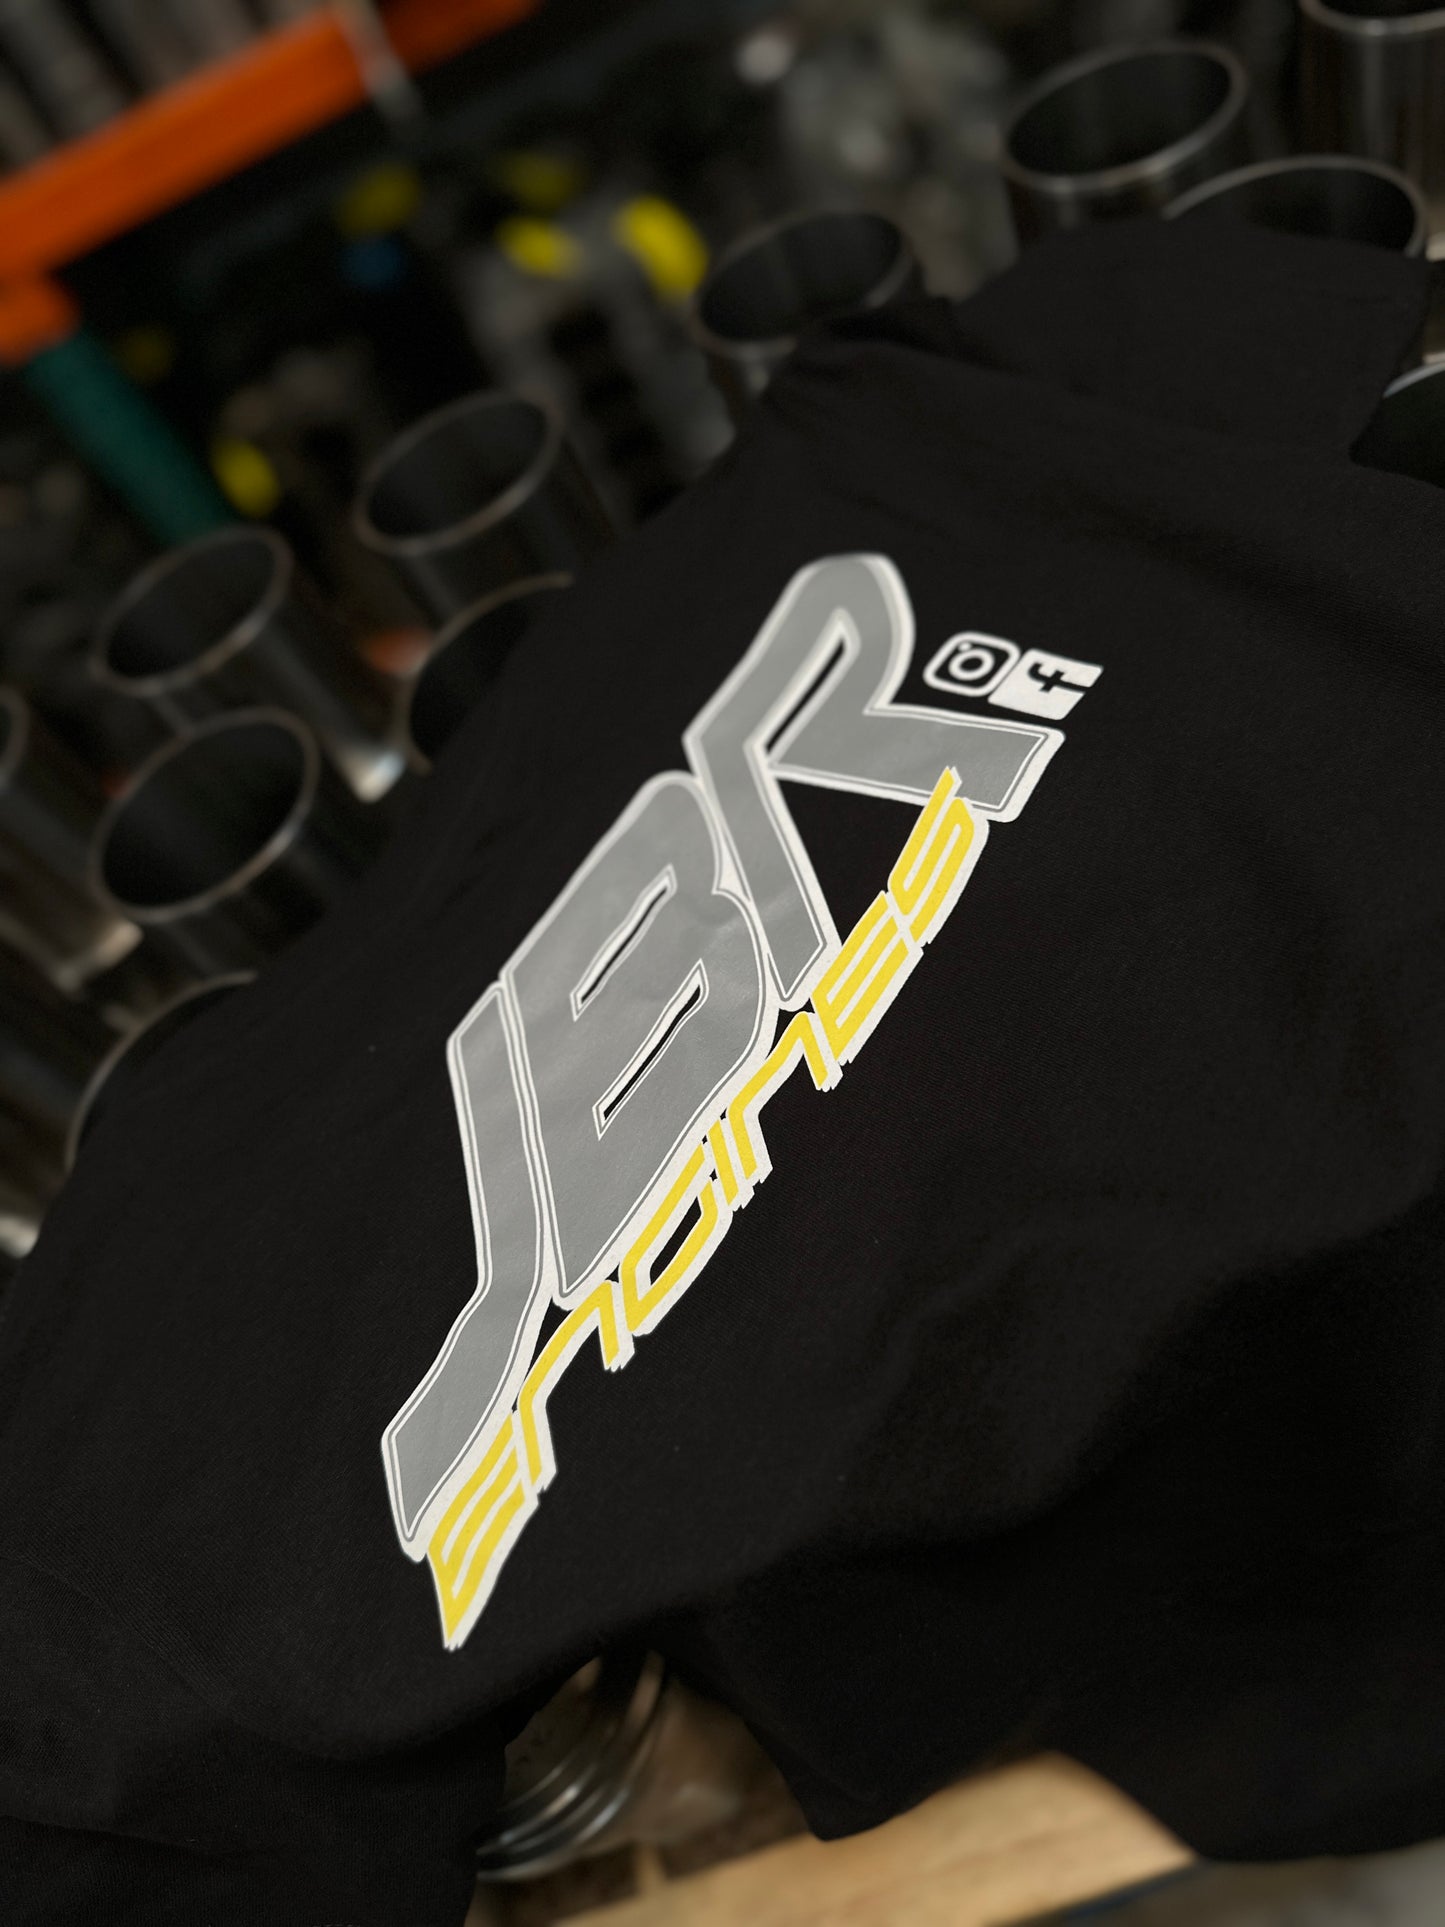 JBR Engines Logo T-Shirts